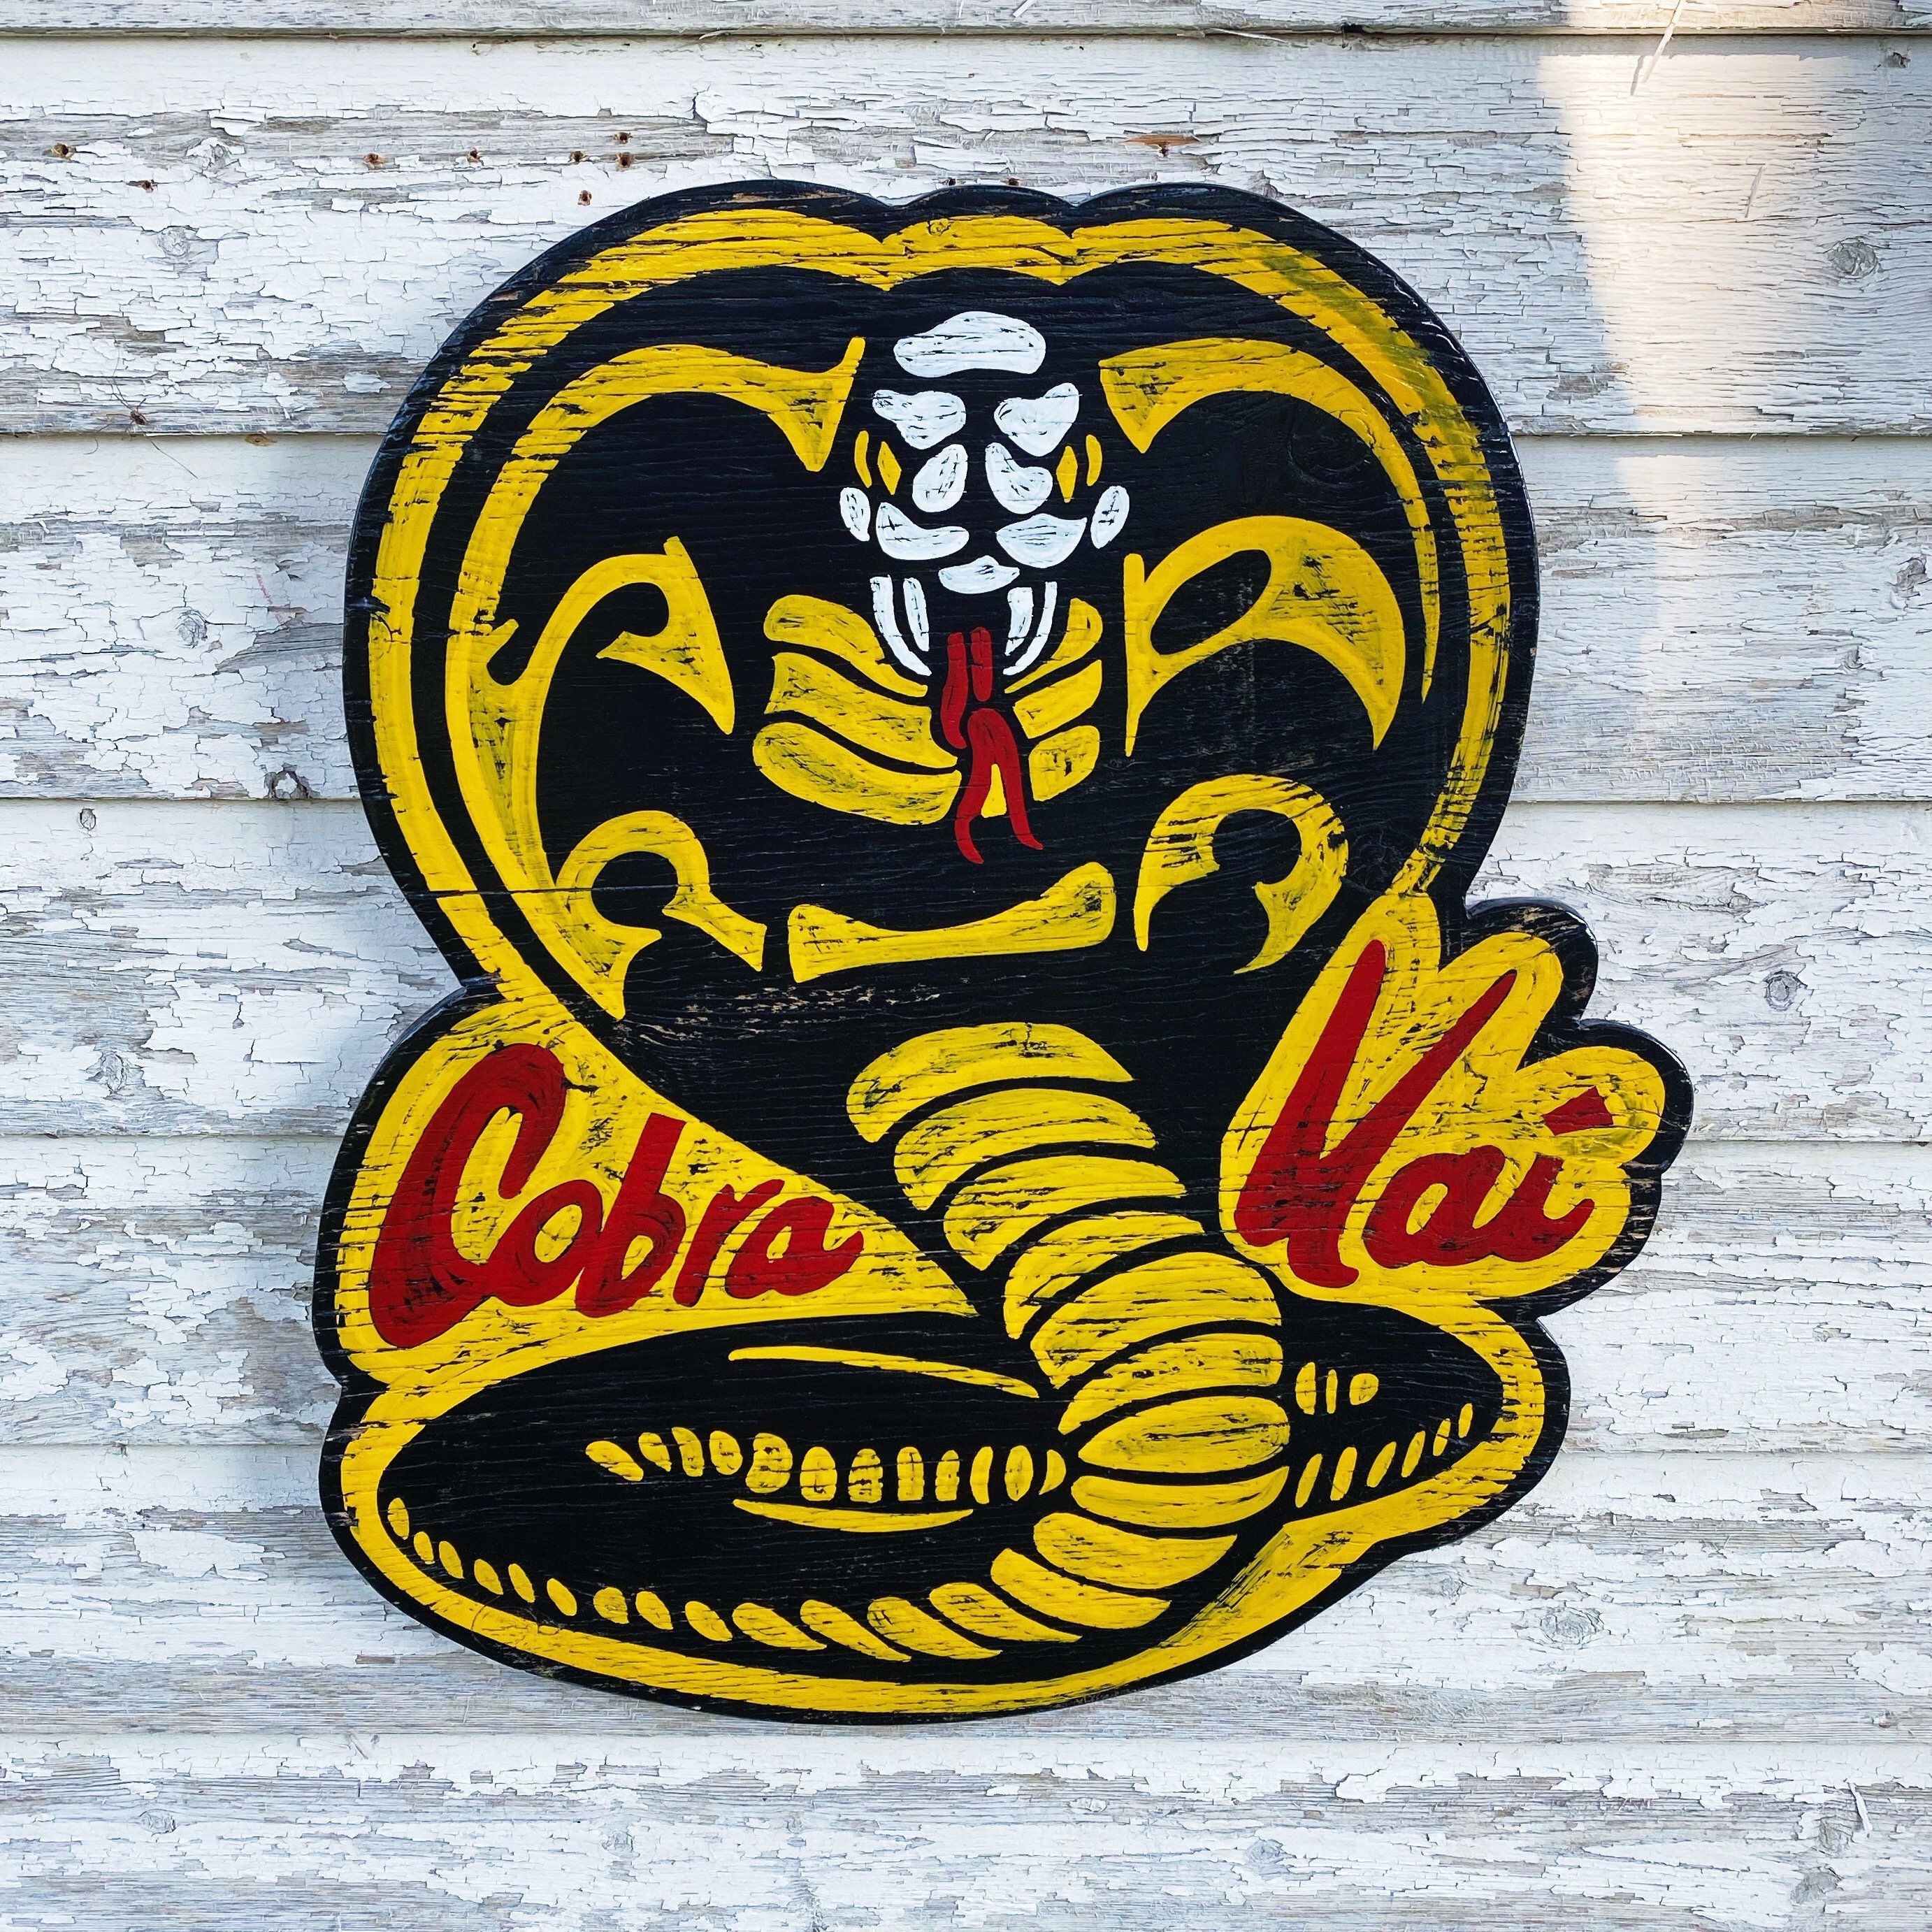 Cobra Kai sign